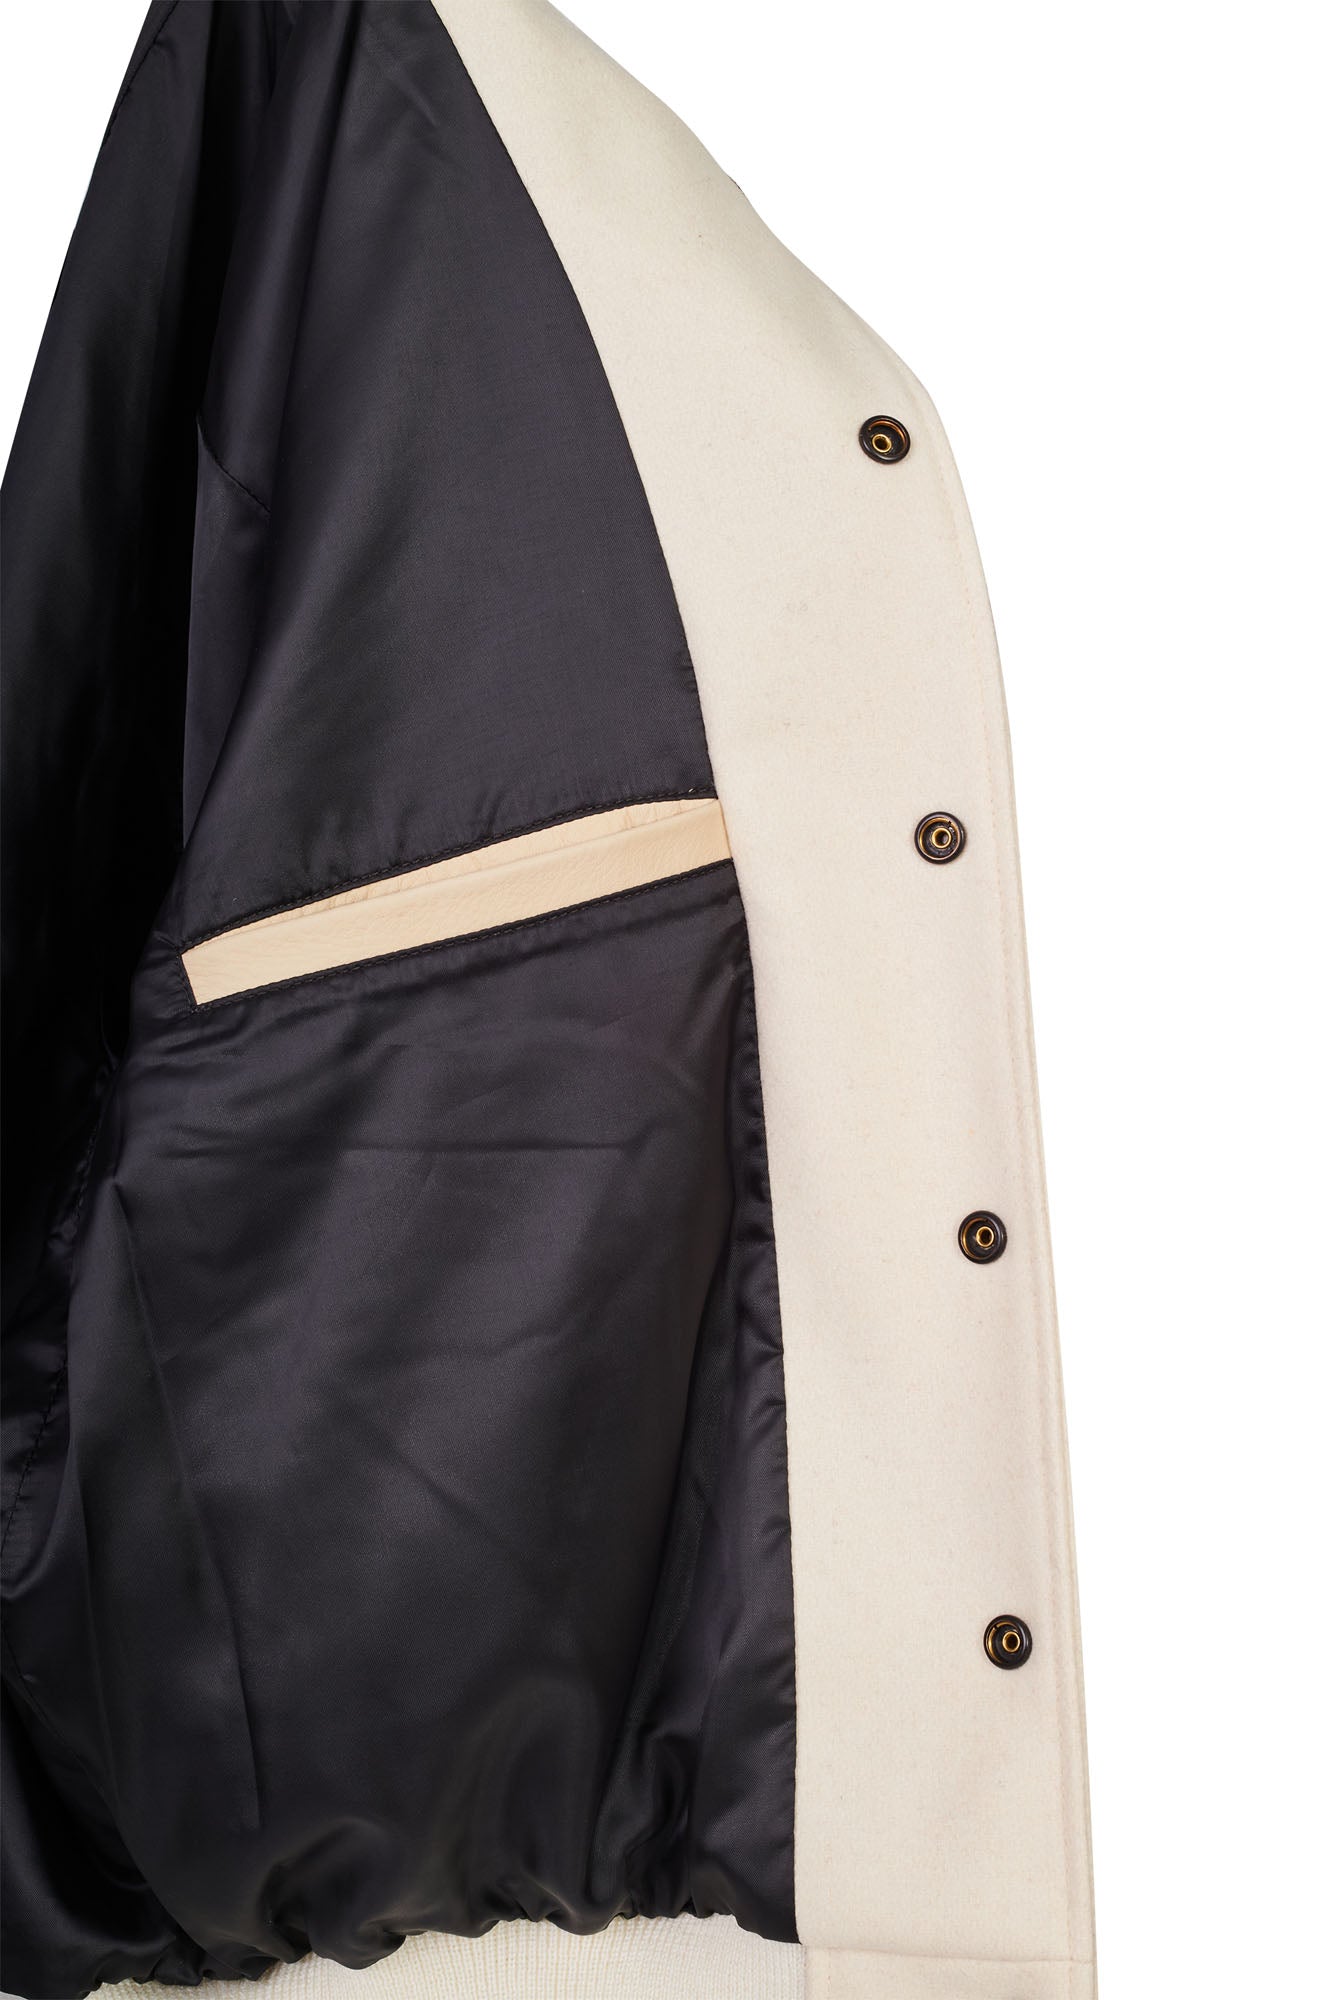 PURPLE BRAND - Men's Letterman Jacket - Style No. P320 - Golden Bear White and Gold - Detail